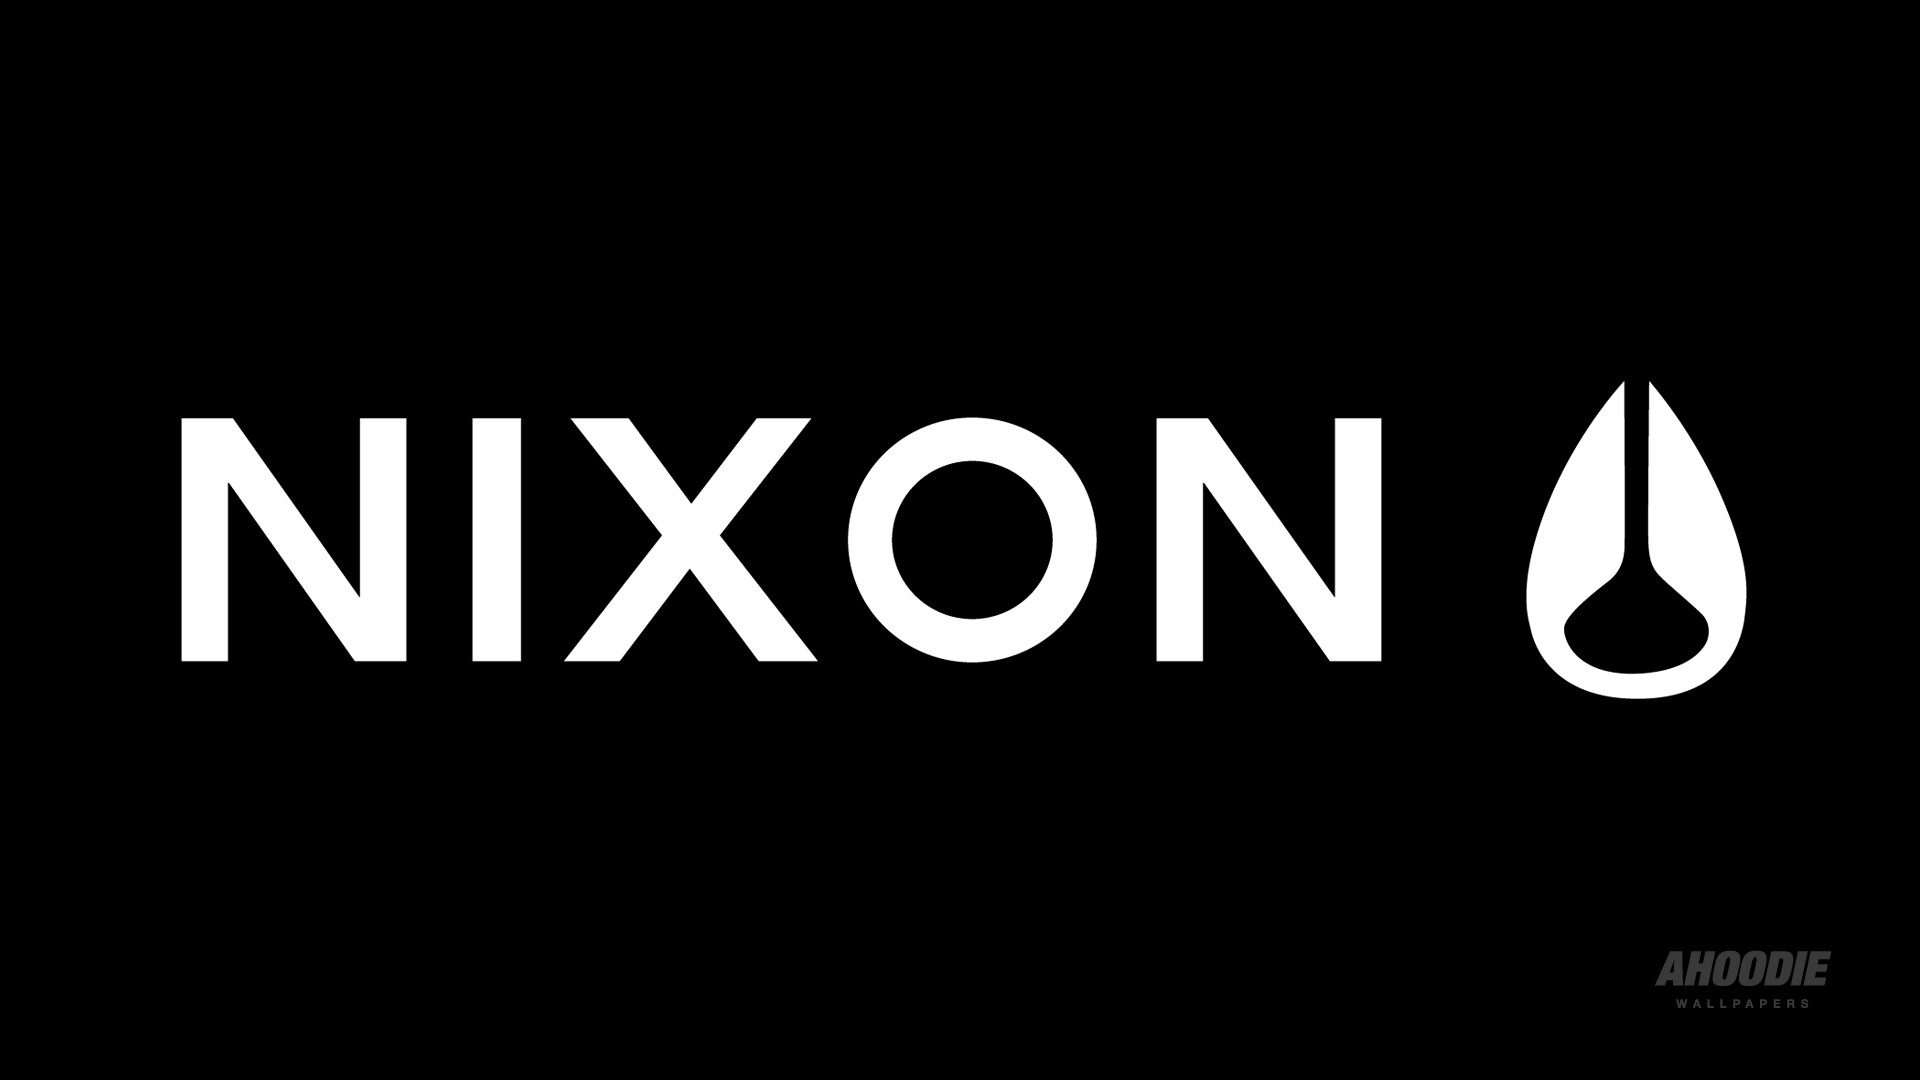 1920x1080 Nixon logo